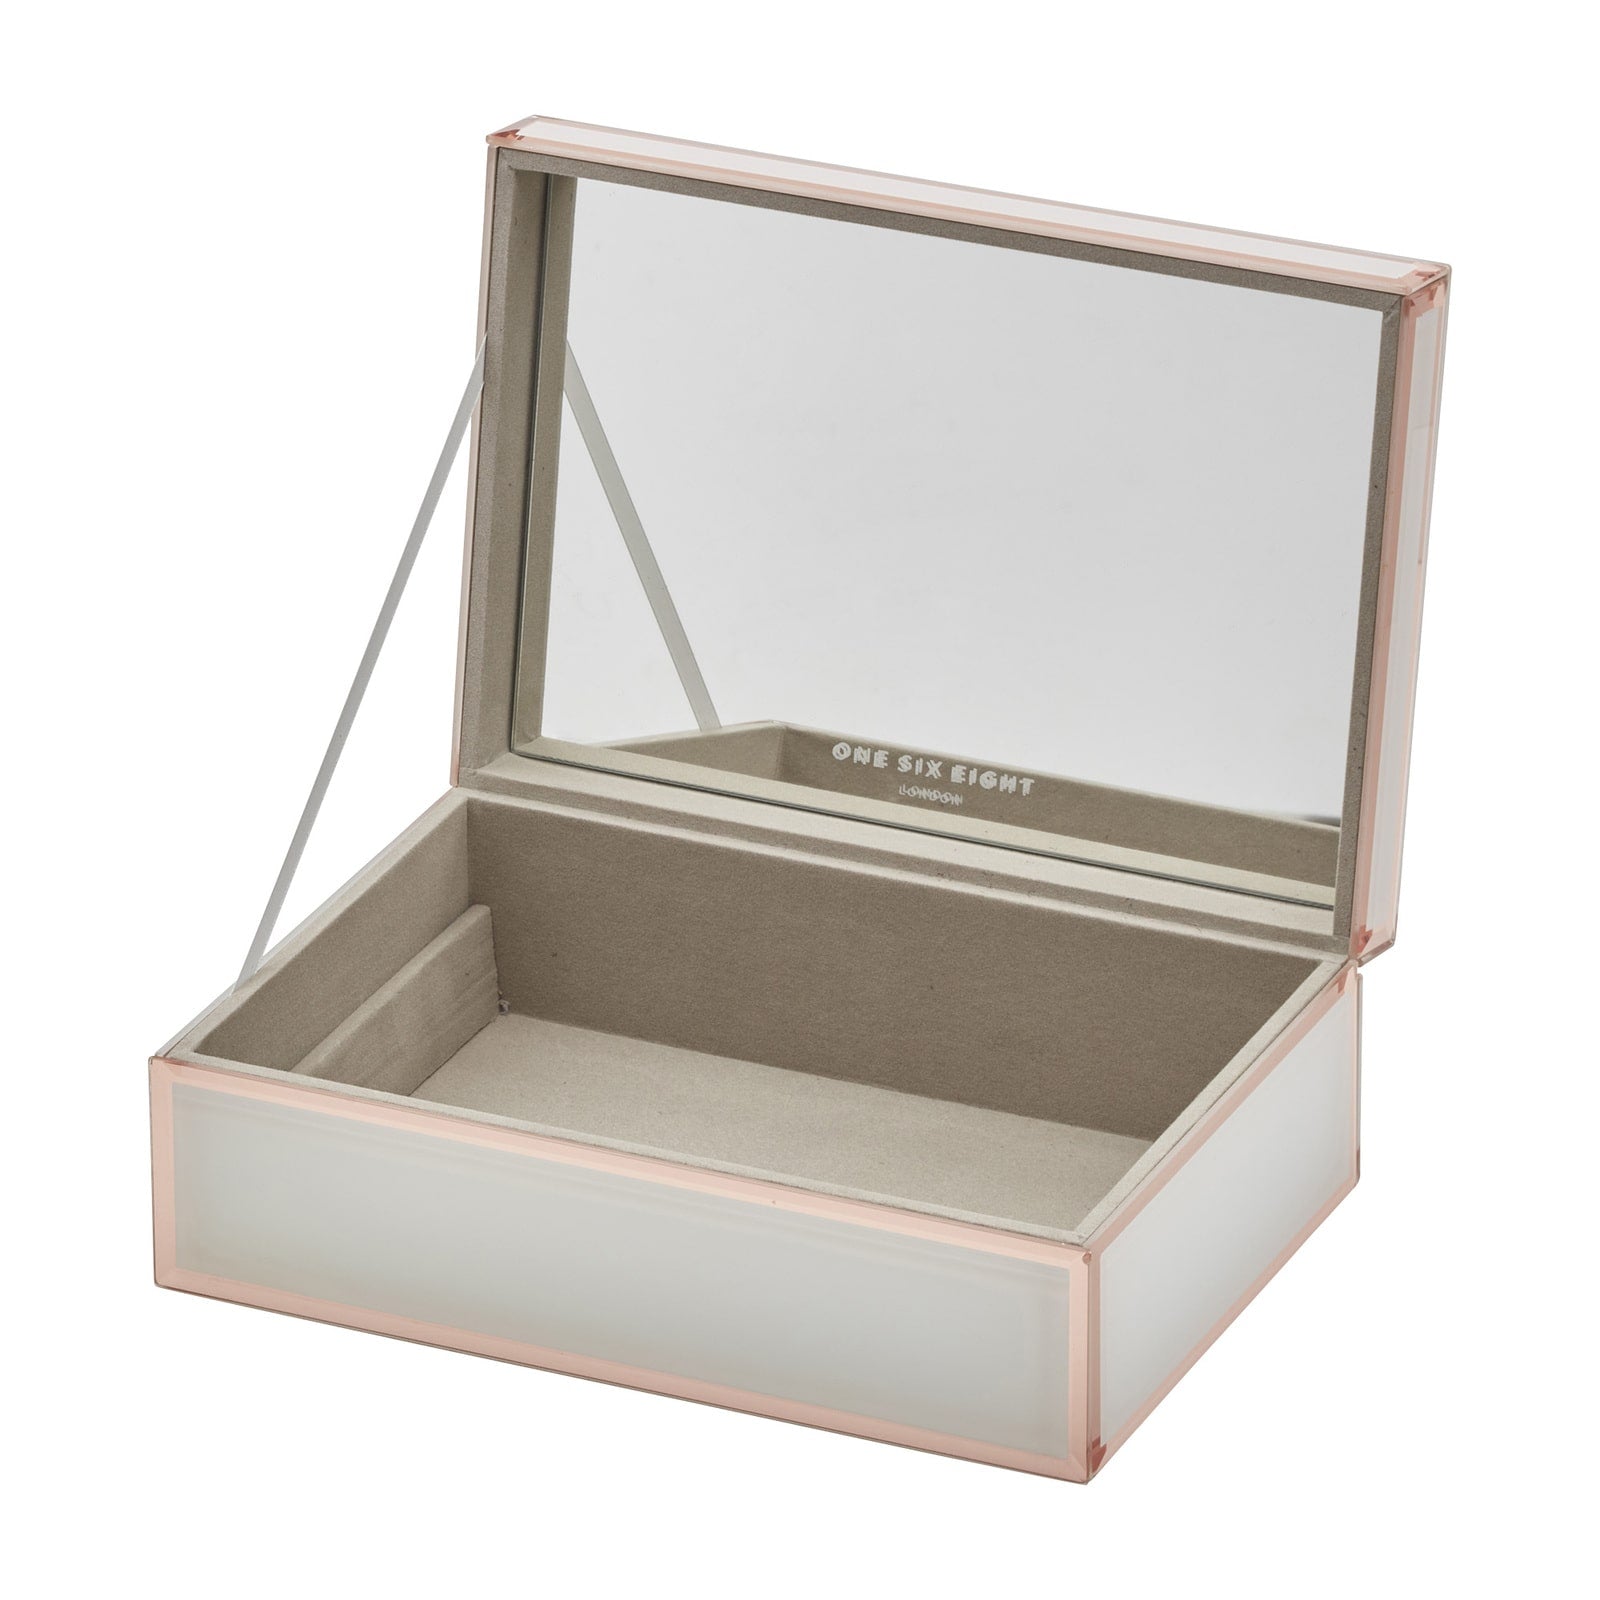 Sara Large Jewellery Box - White - box open, no tray